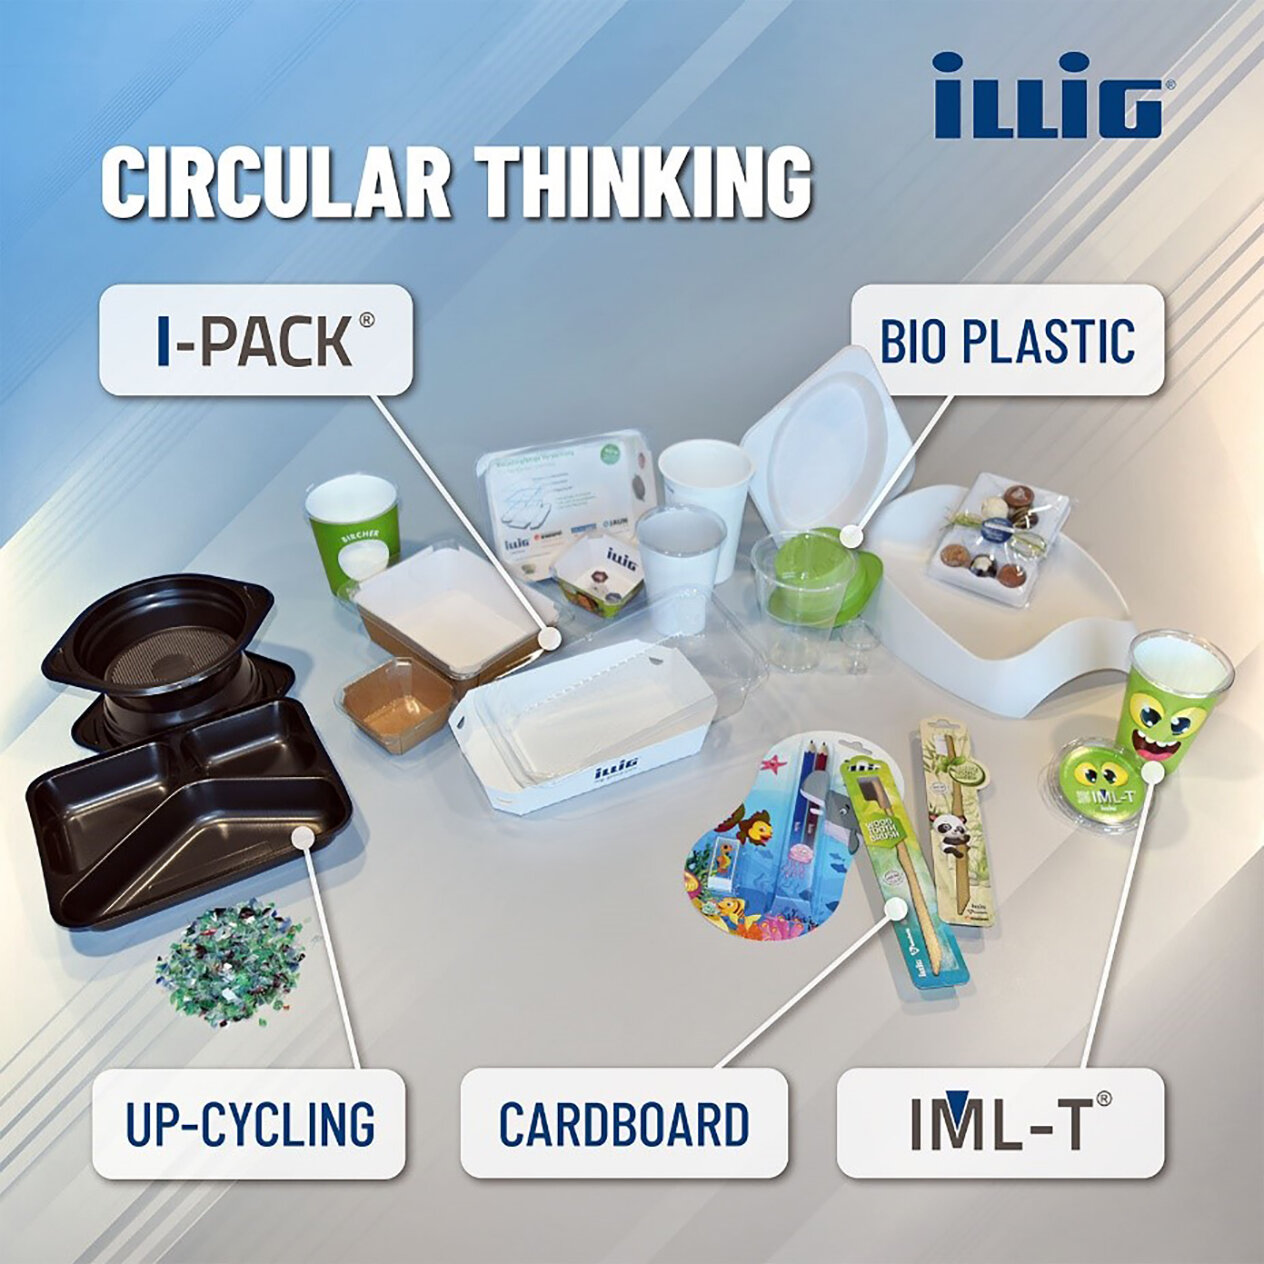 Circular Thinking Solutions von ILLIG | © ILLIG Maschinenbau GmbH & Co. KG